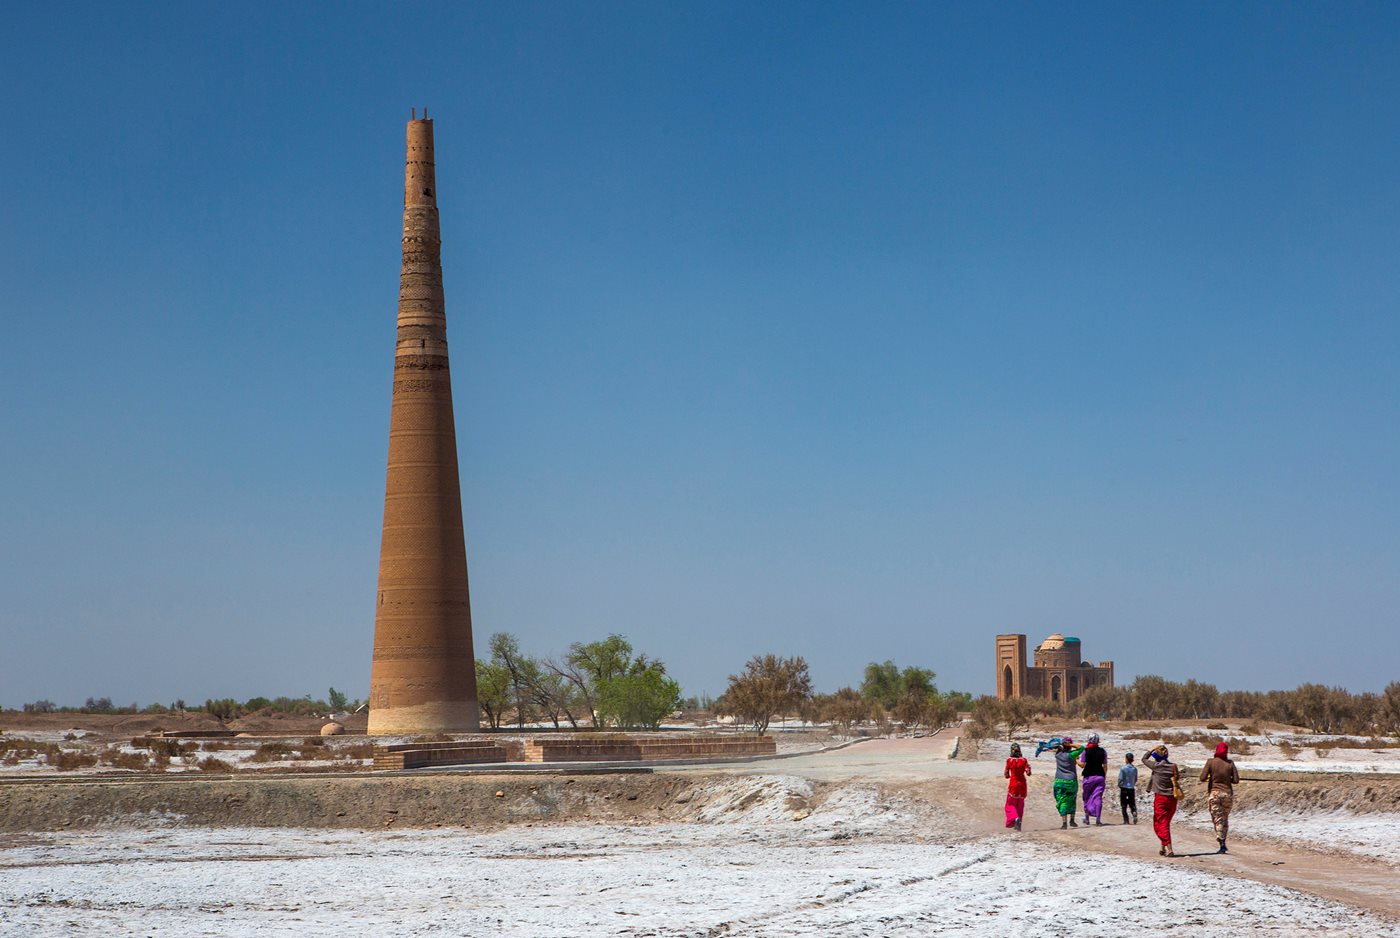 Visitors to monuments at Konye Urgench head toward the Qutlug Timur Minaret and the adjacent site honoring his wife, Tura Beg Khanum.